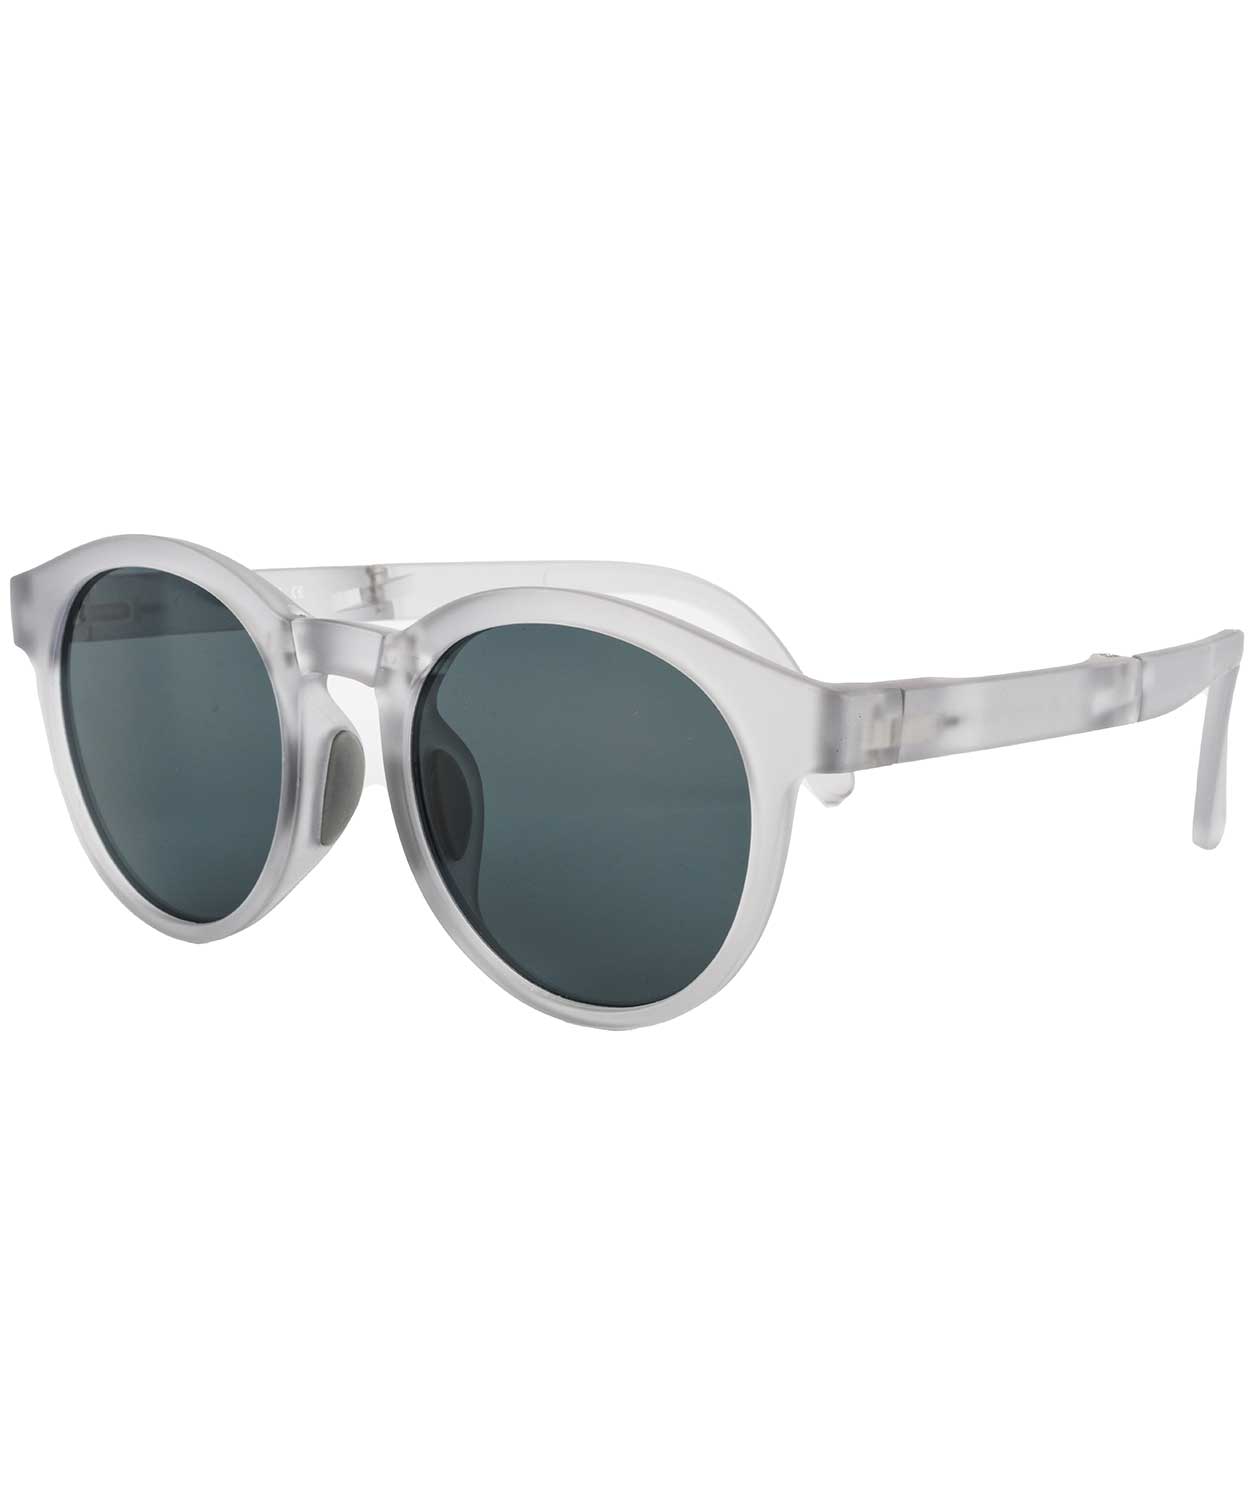 Foldie Sunglasses 9-078